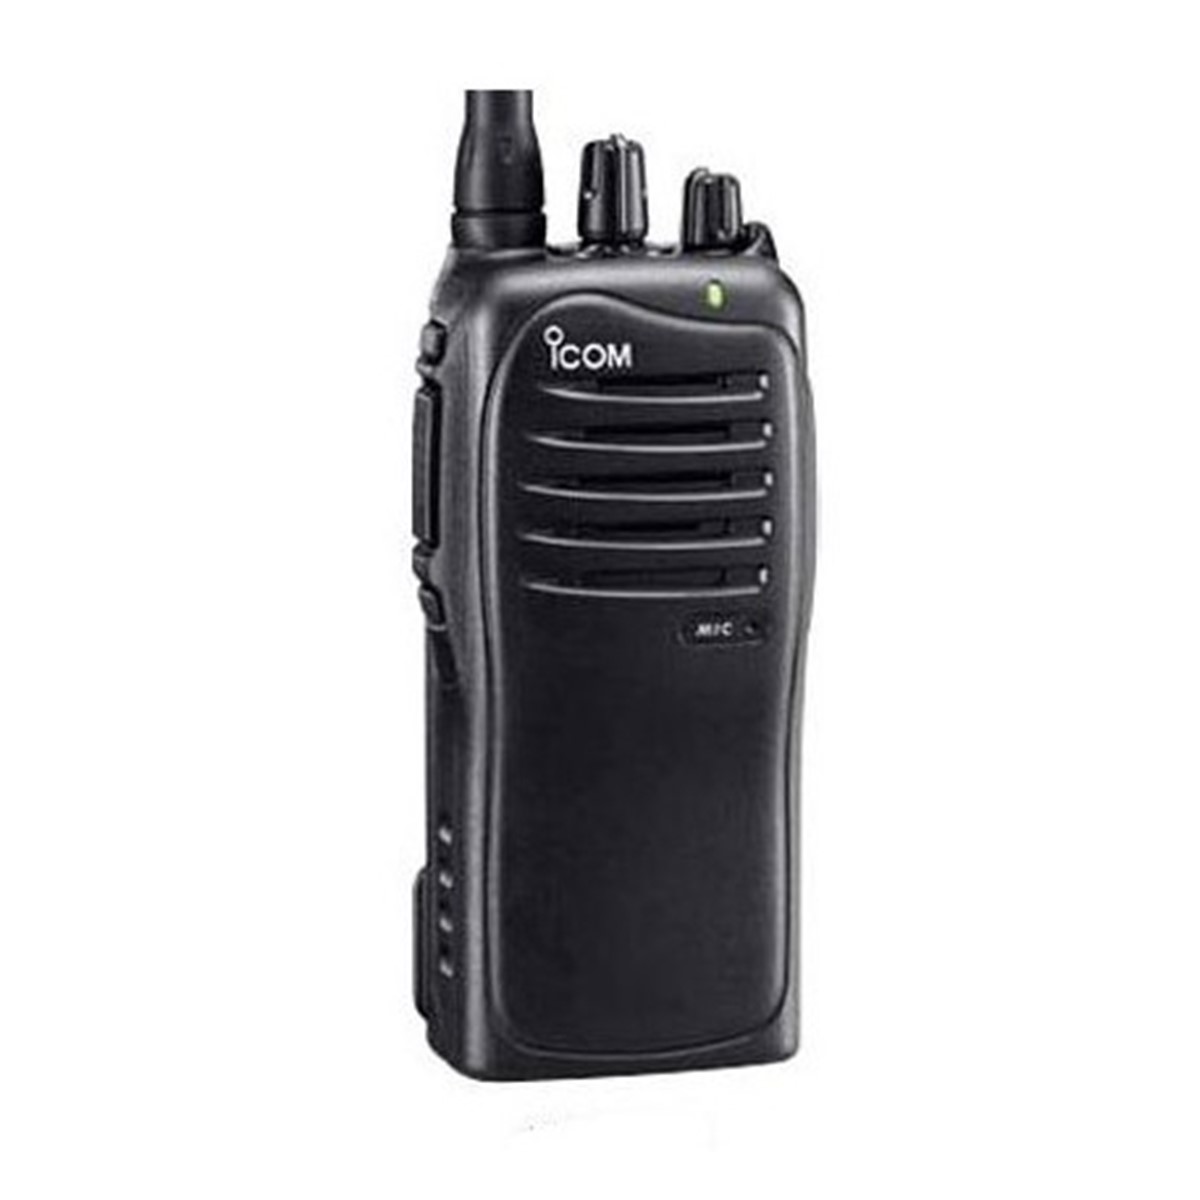 Radio Icom IC-F3013 Analógico VHF 136-174 MHz